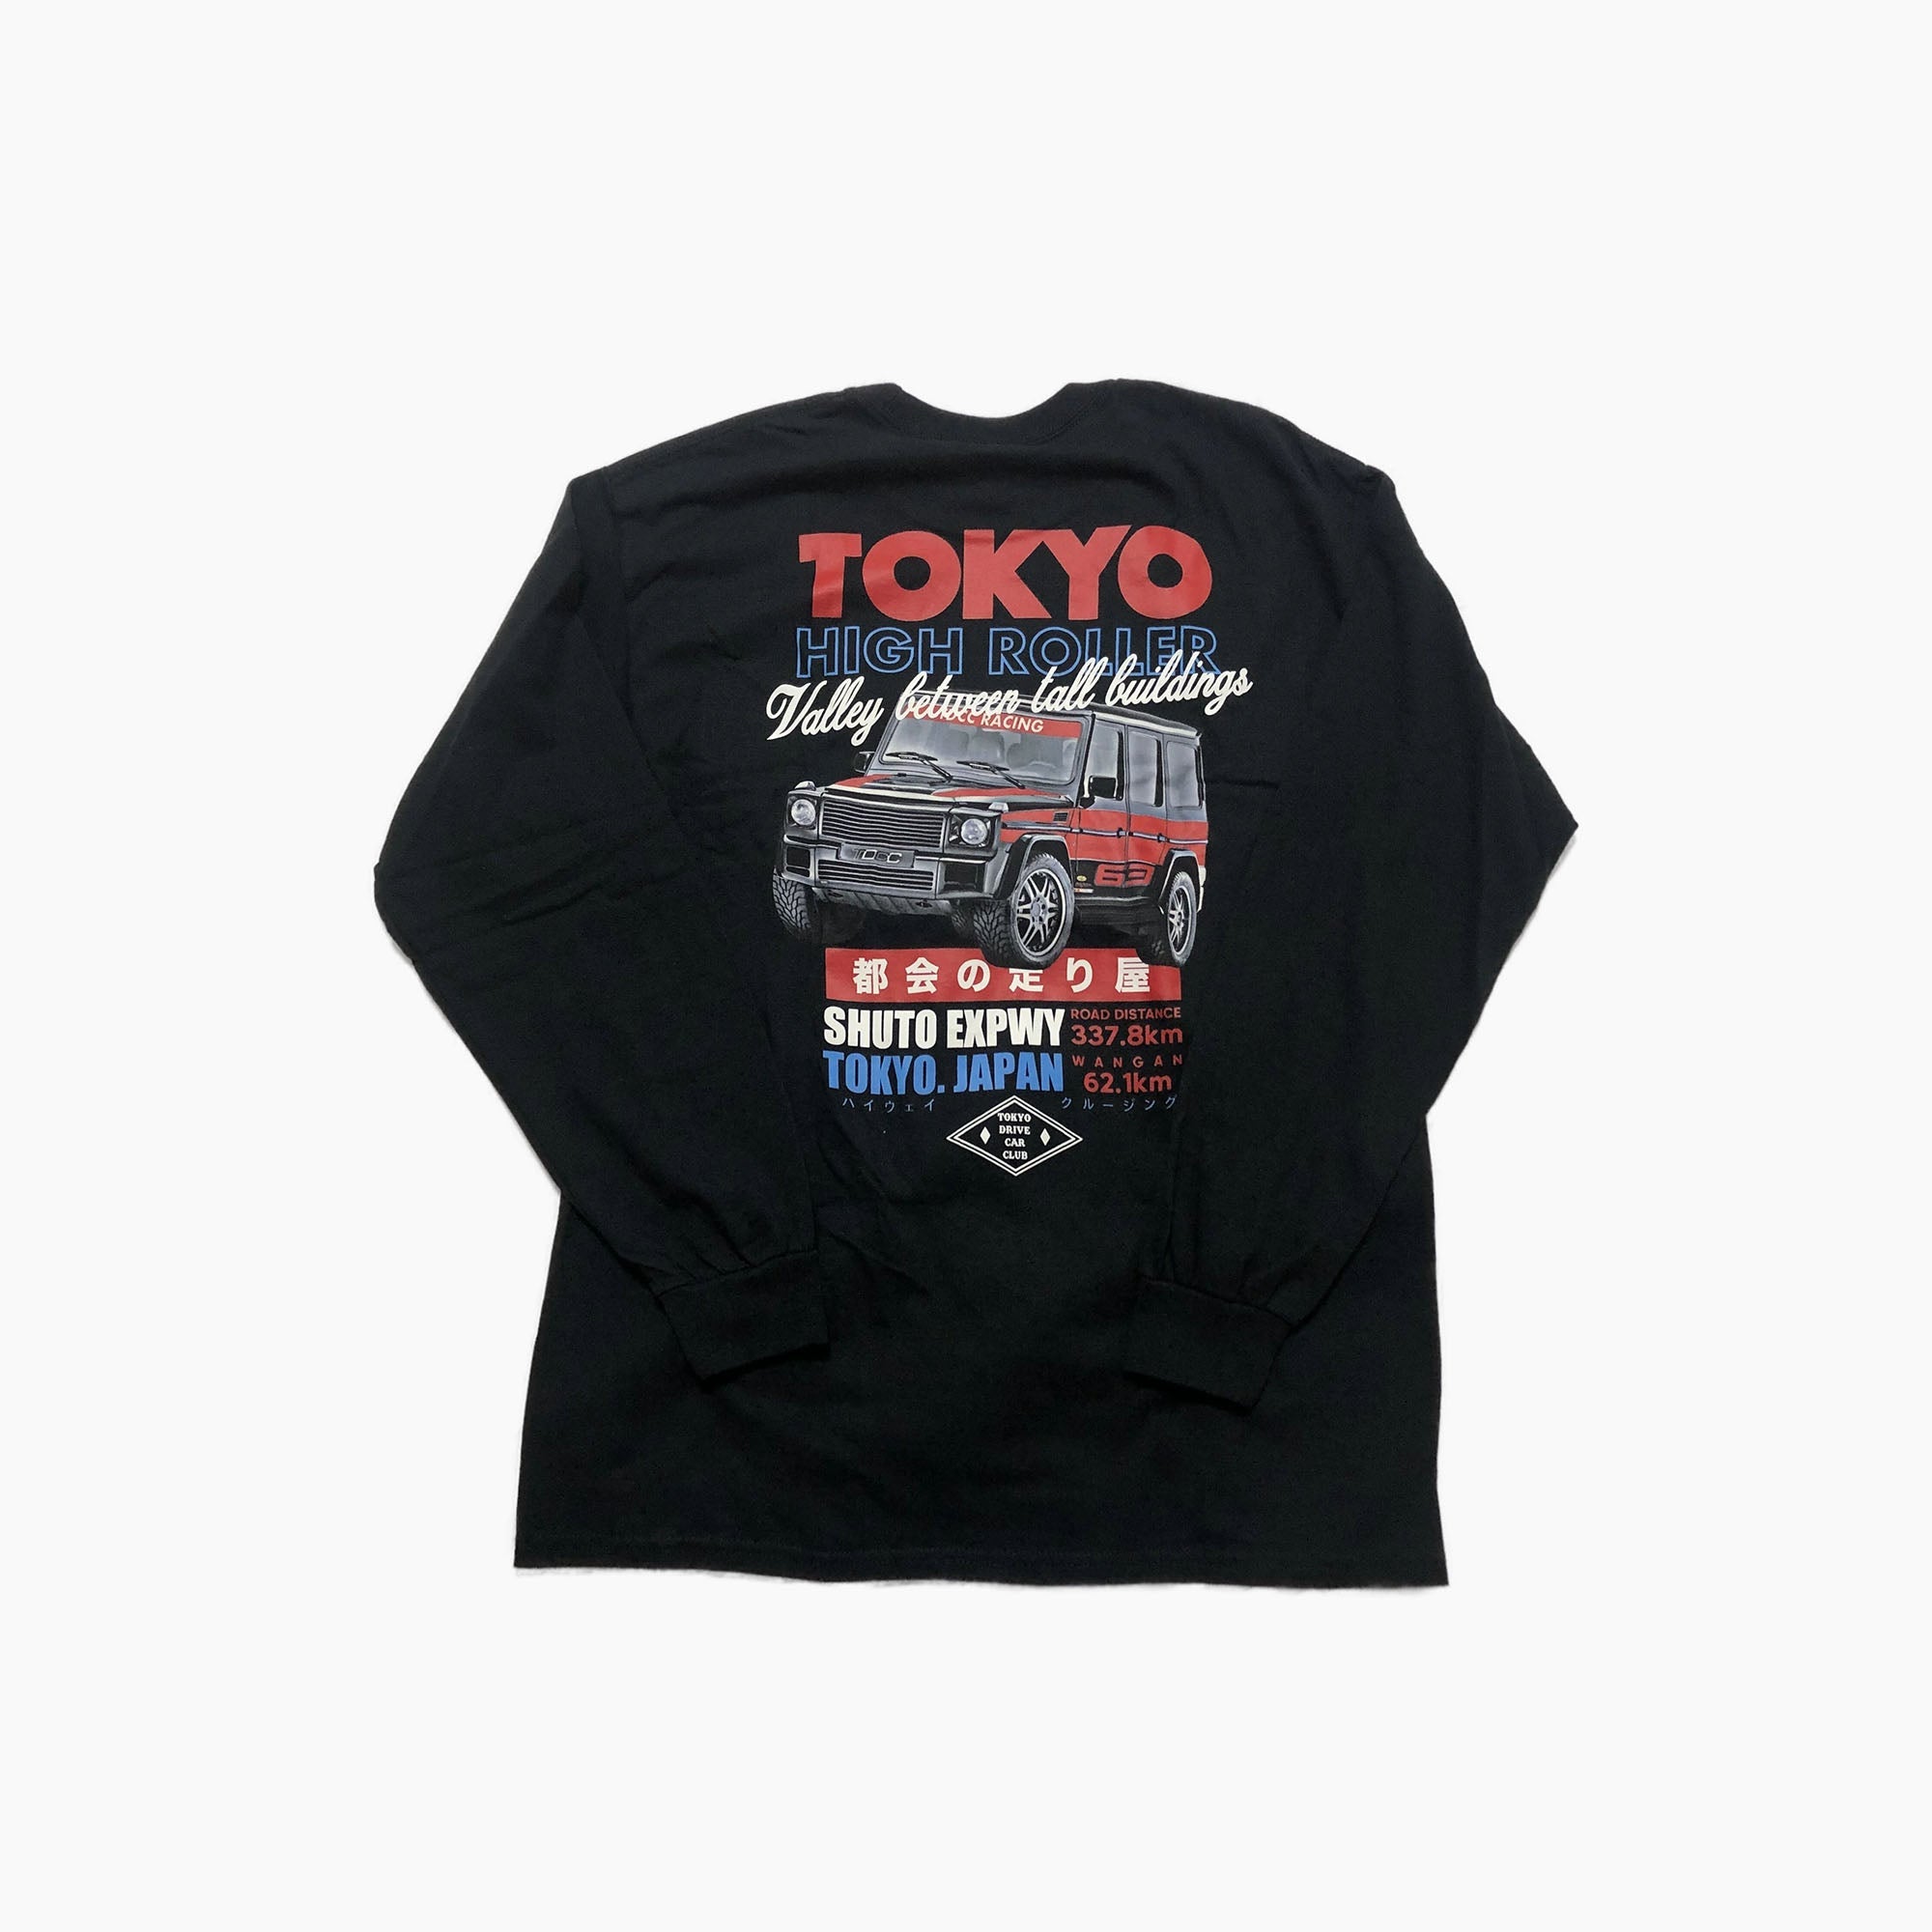 Tokyo Drive Car Club | G-Wagon High Roller Long Sleeve T-Shirt-T-Shirt-Tokyo Drive Car Club-gpx-store